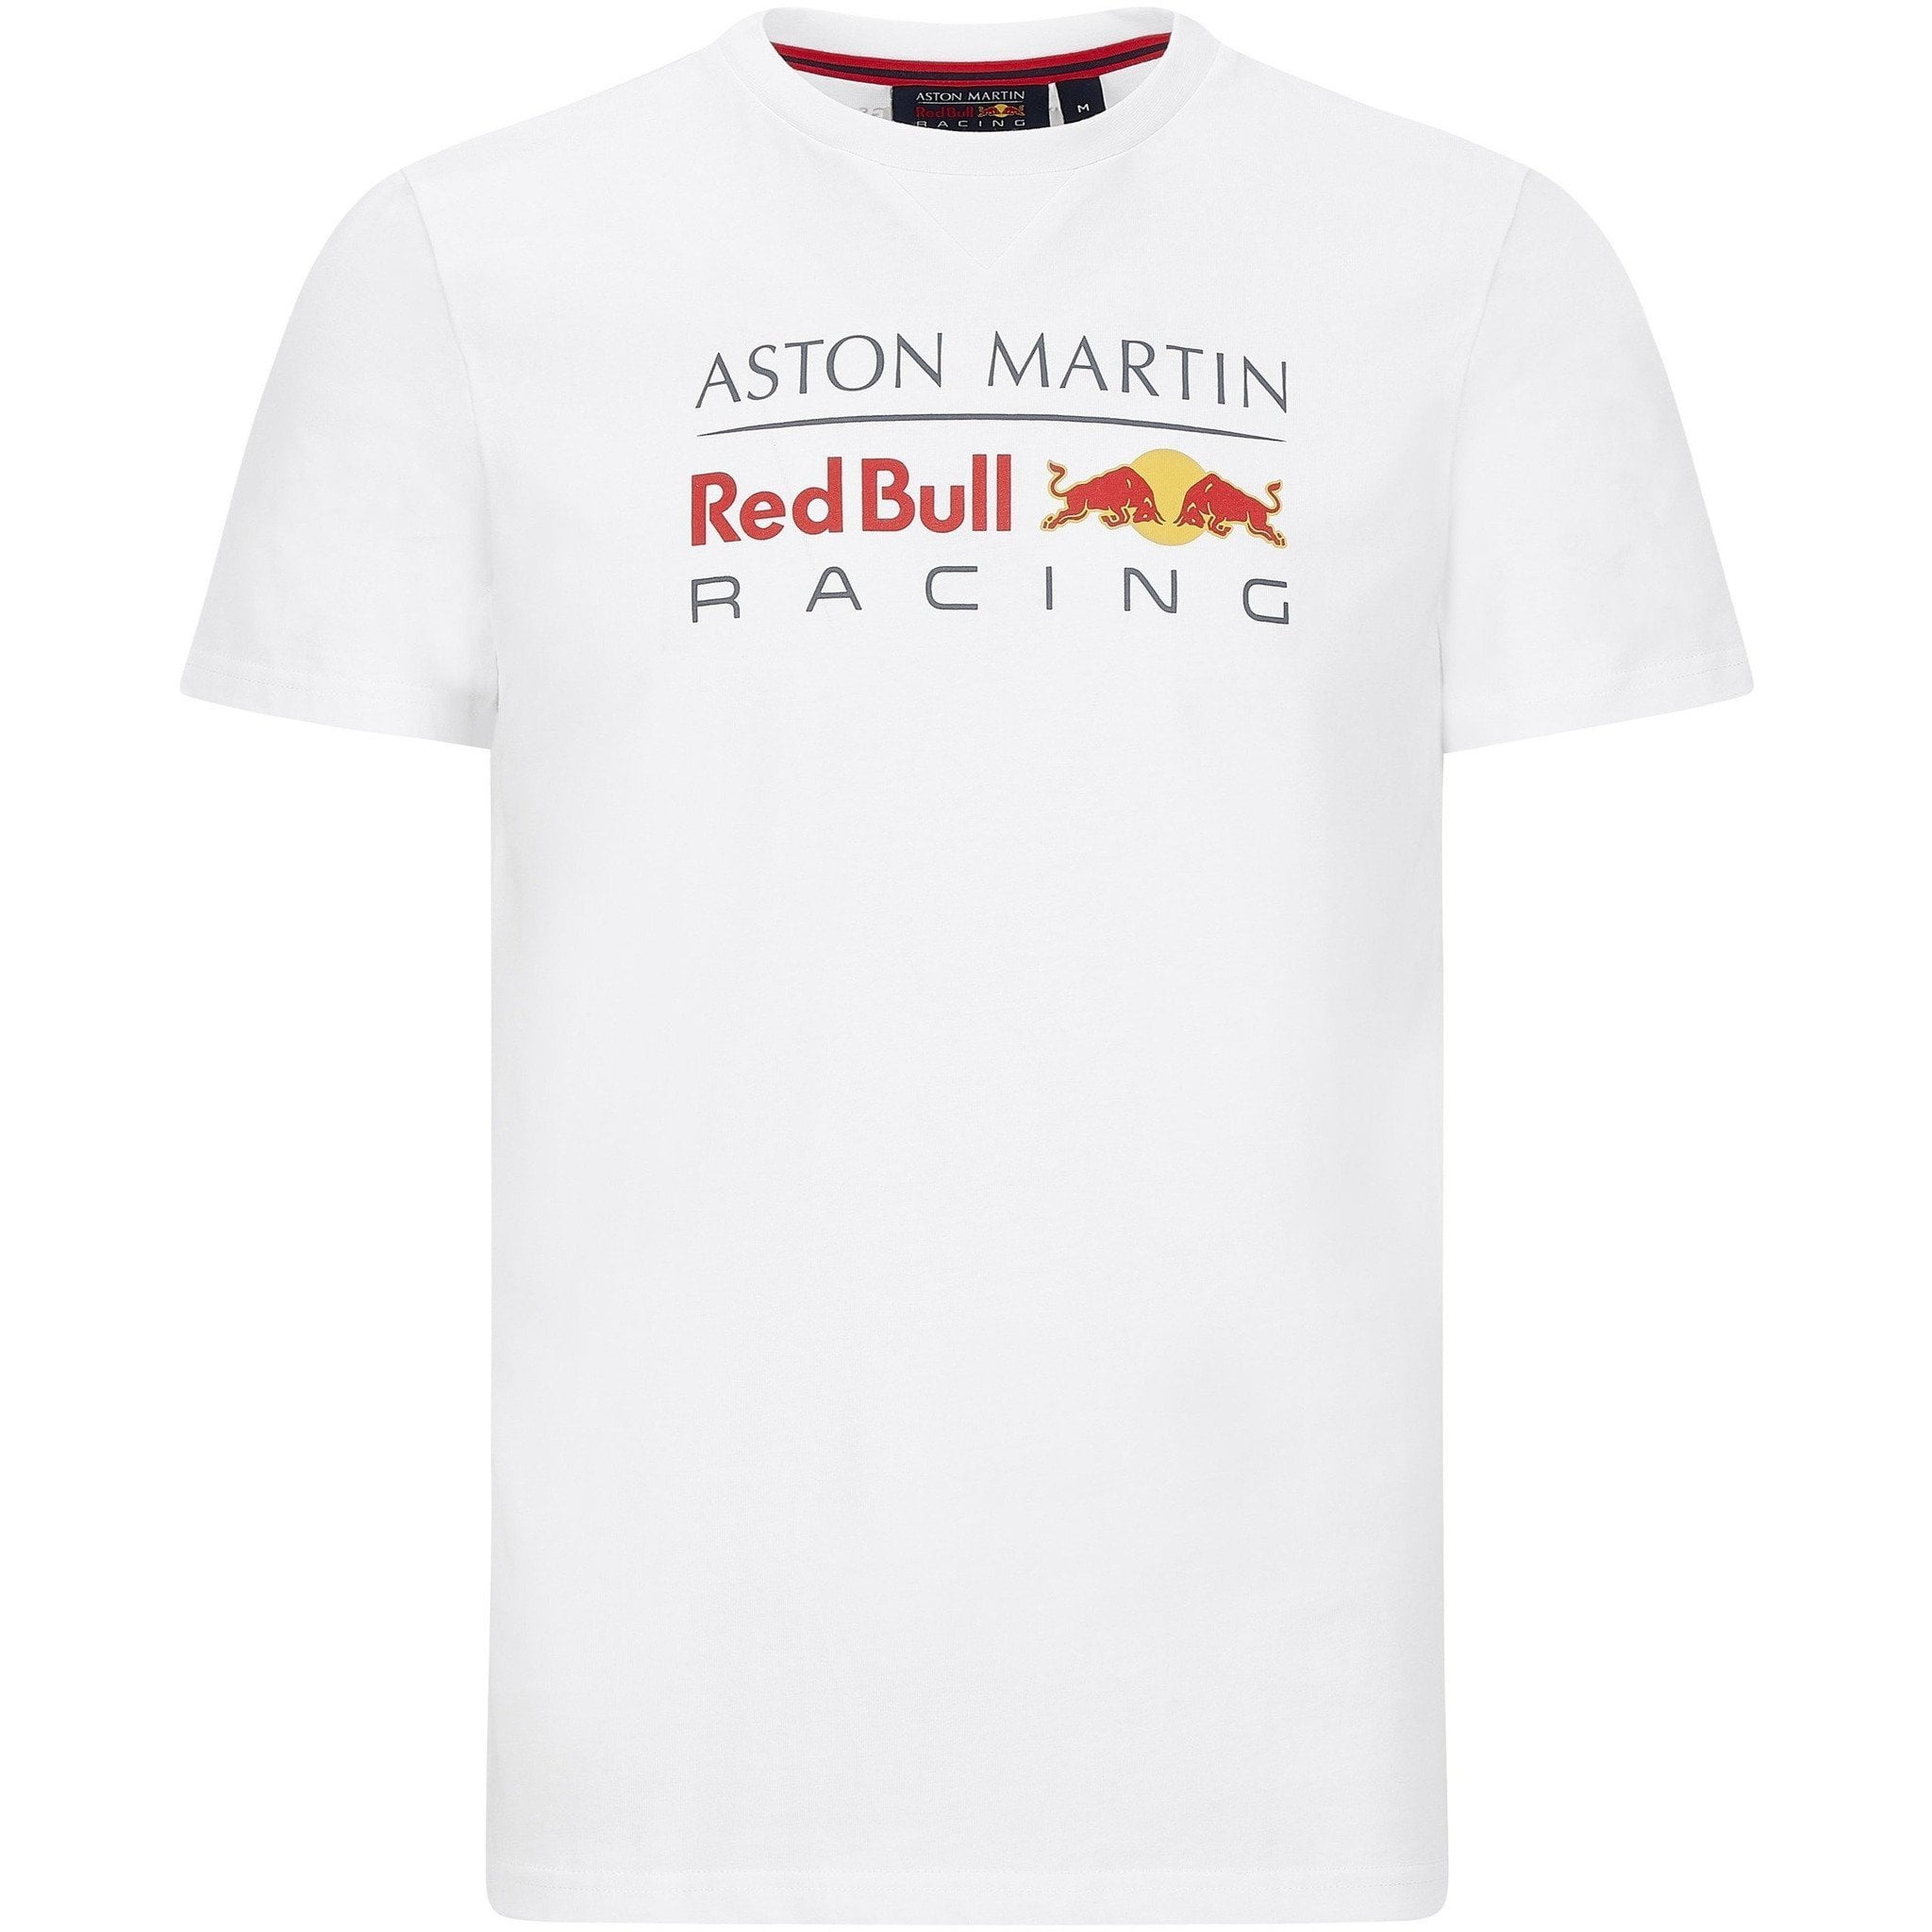 Red Bull Logo Shirt Promotion Off59